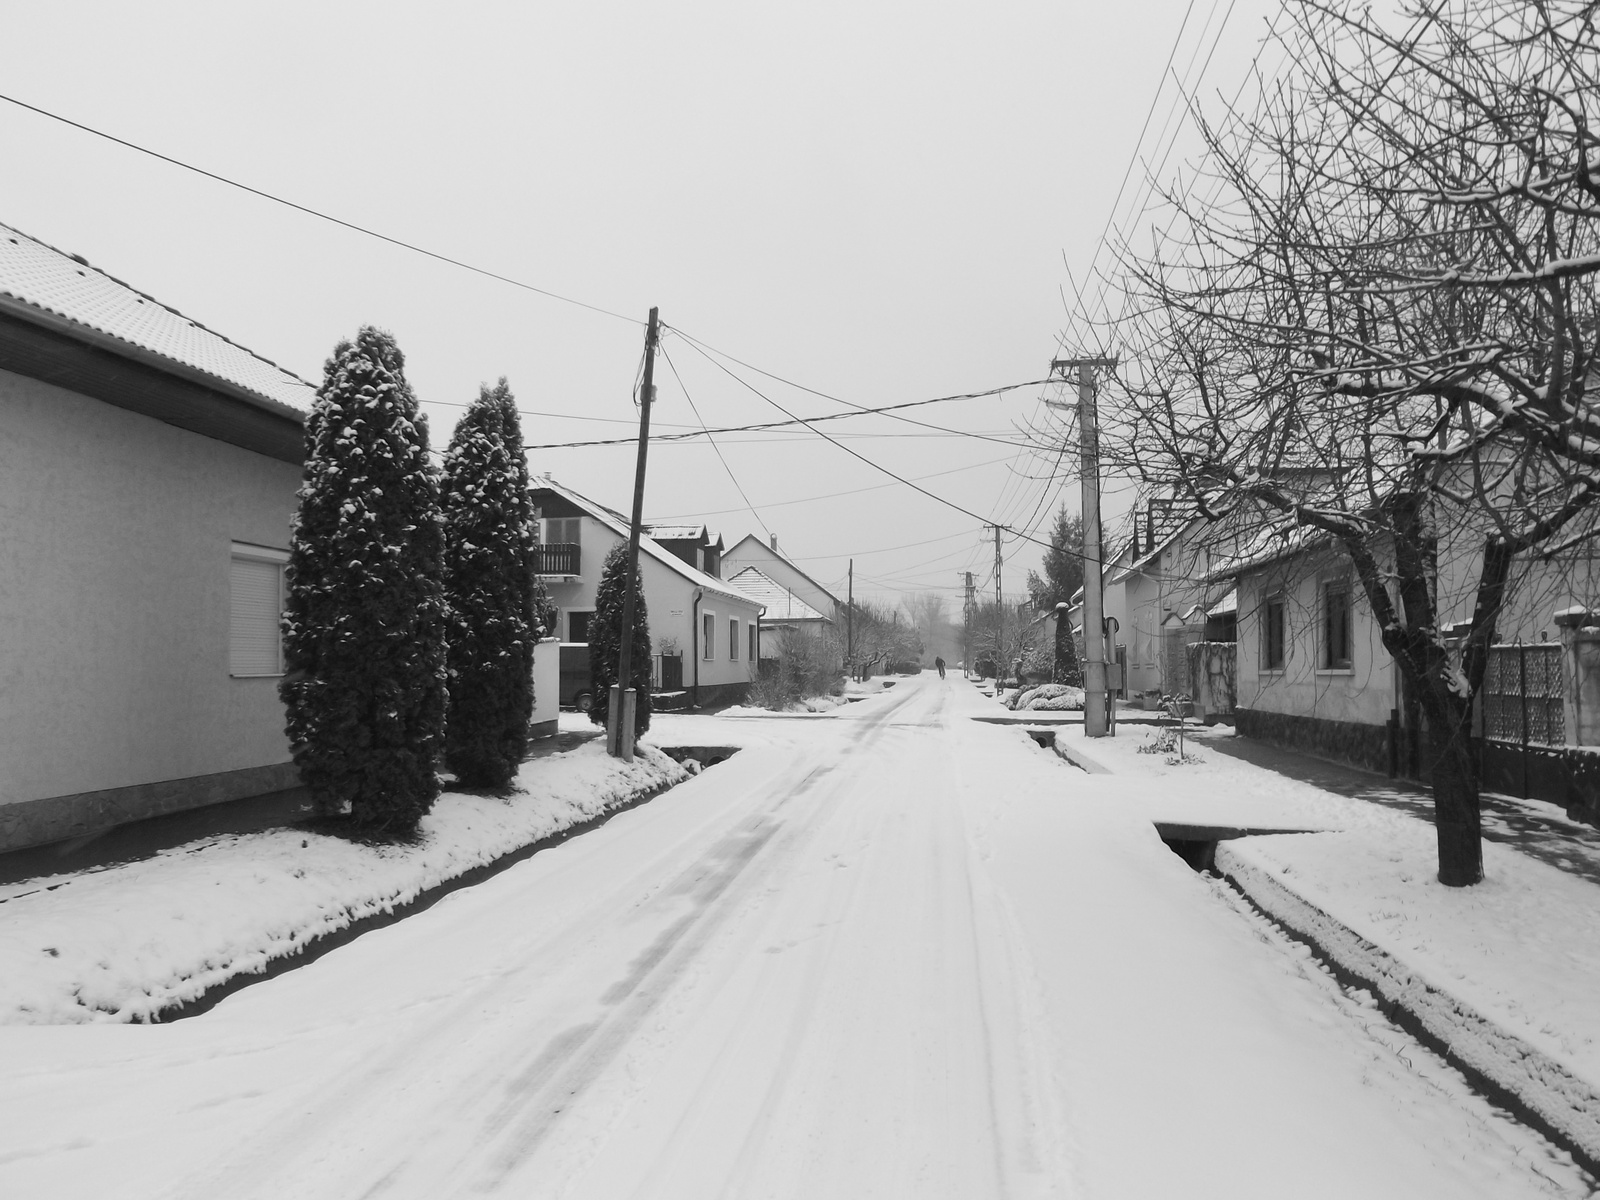 havas utca